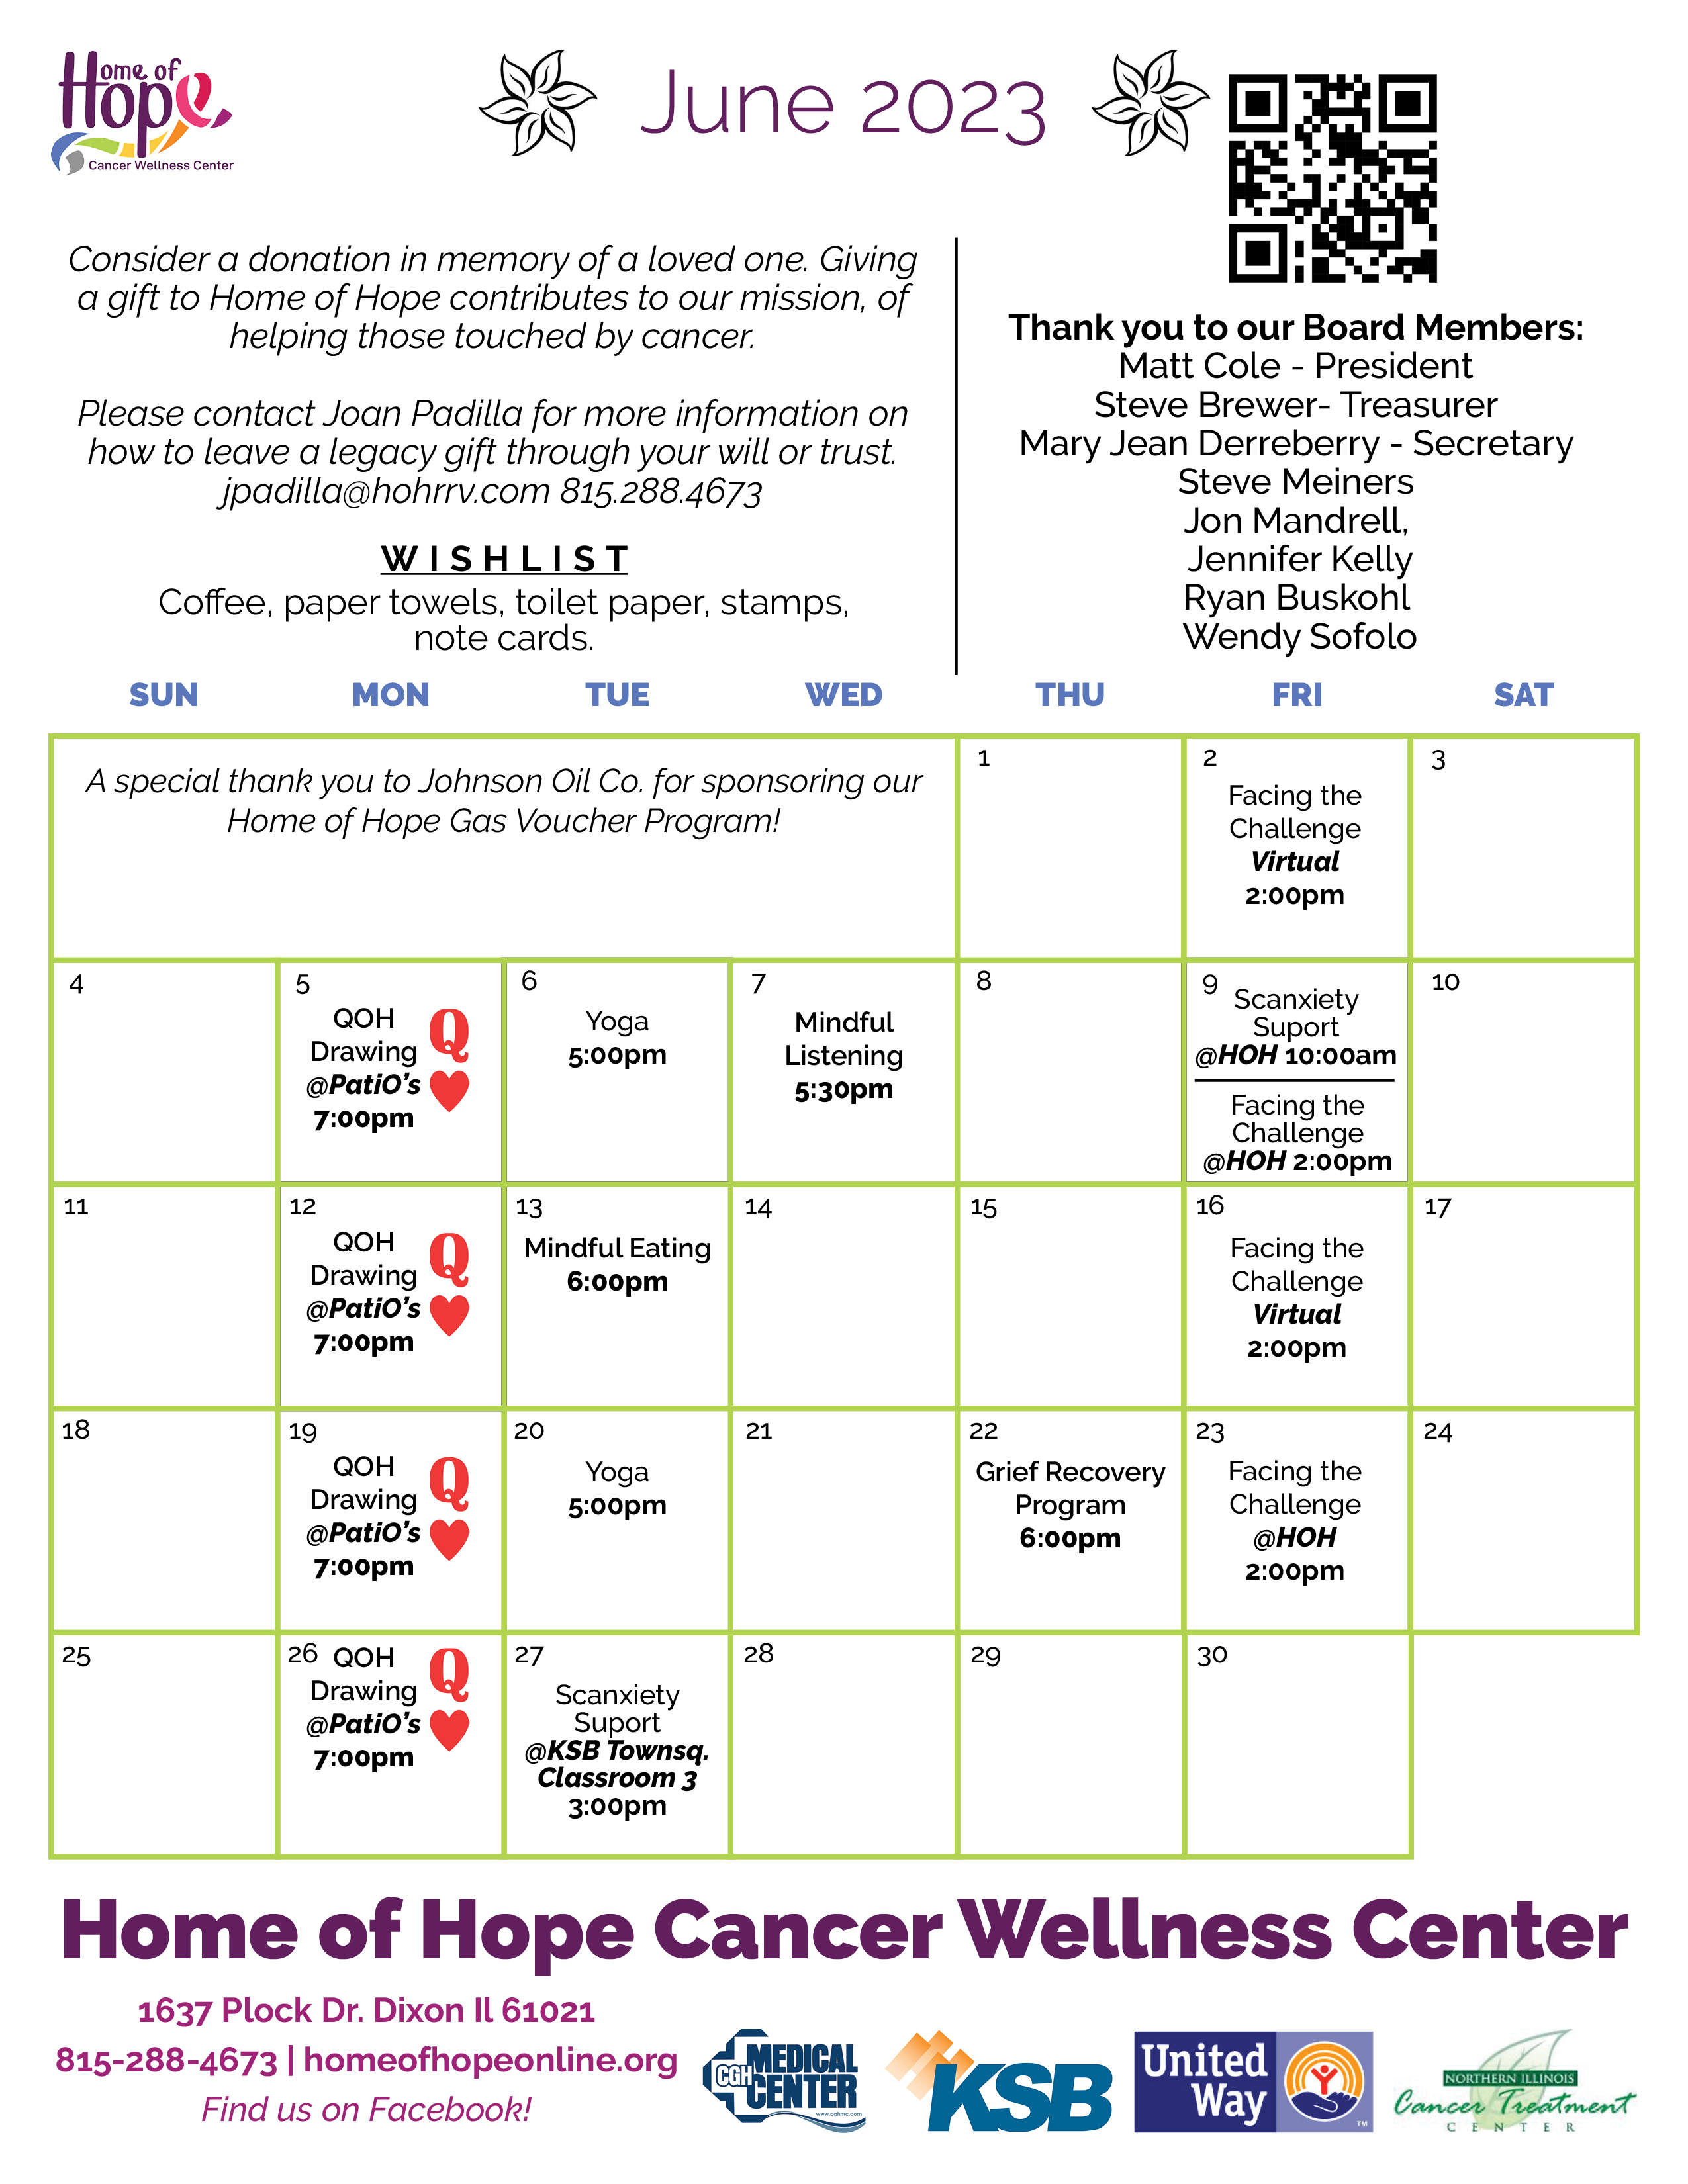 Home Of Hope Cancer Wellness Center's June Monthly Calendar